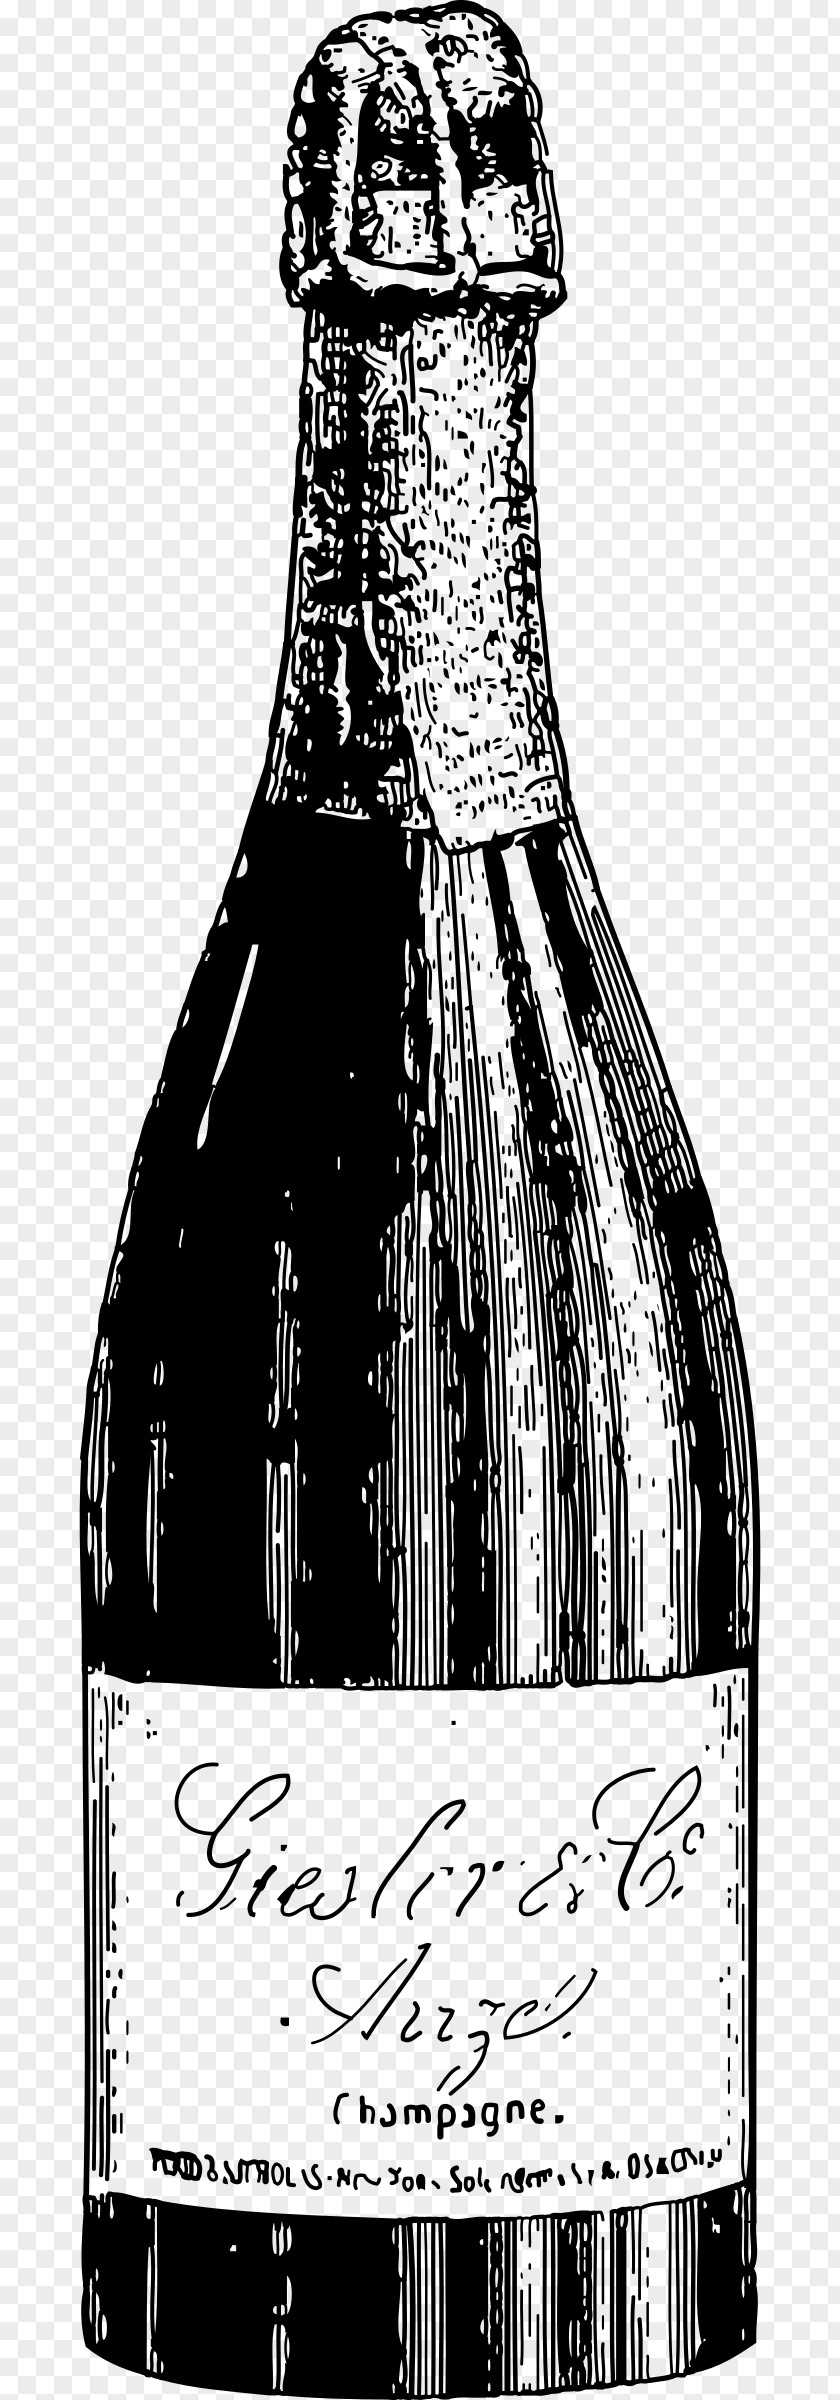 Champagne White Wine Bottle Clip Art PNG